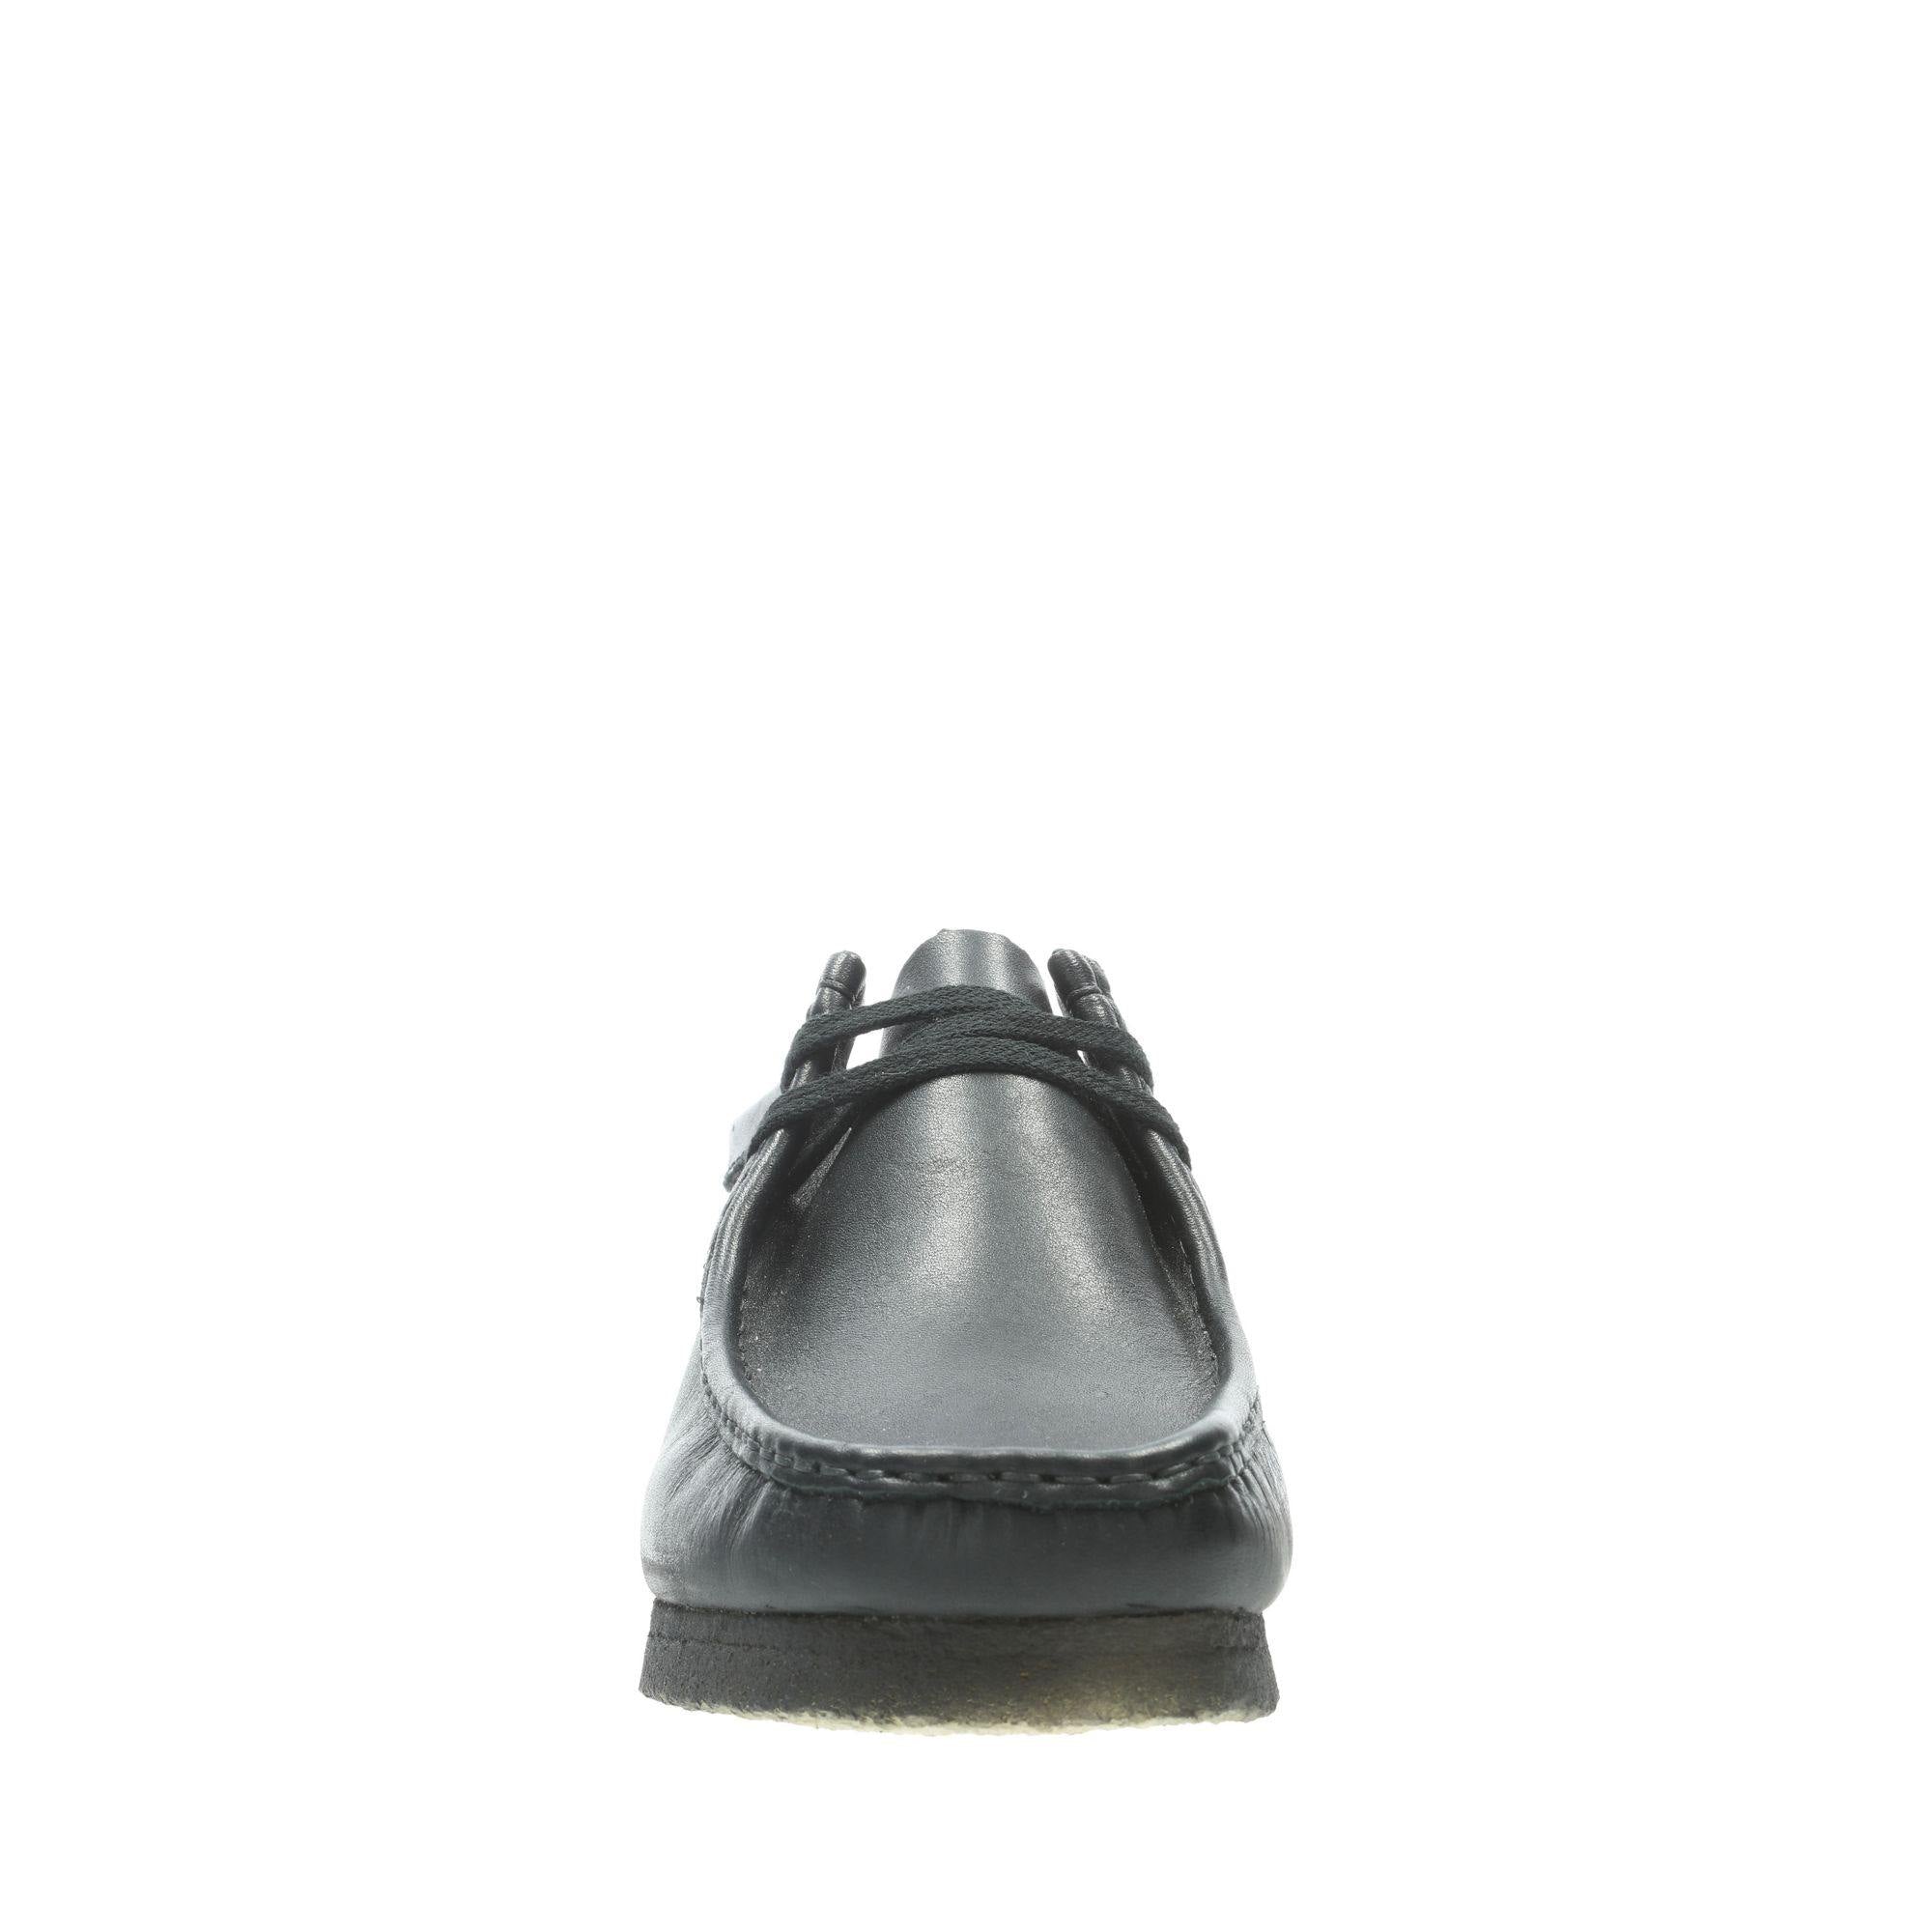 W-L (Wallabee shoe black leather g) 521913100 - Otahuhu Shoes